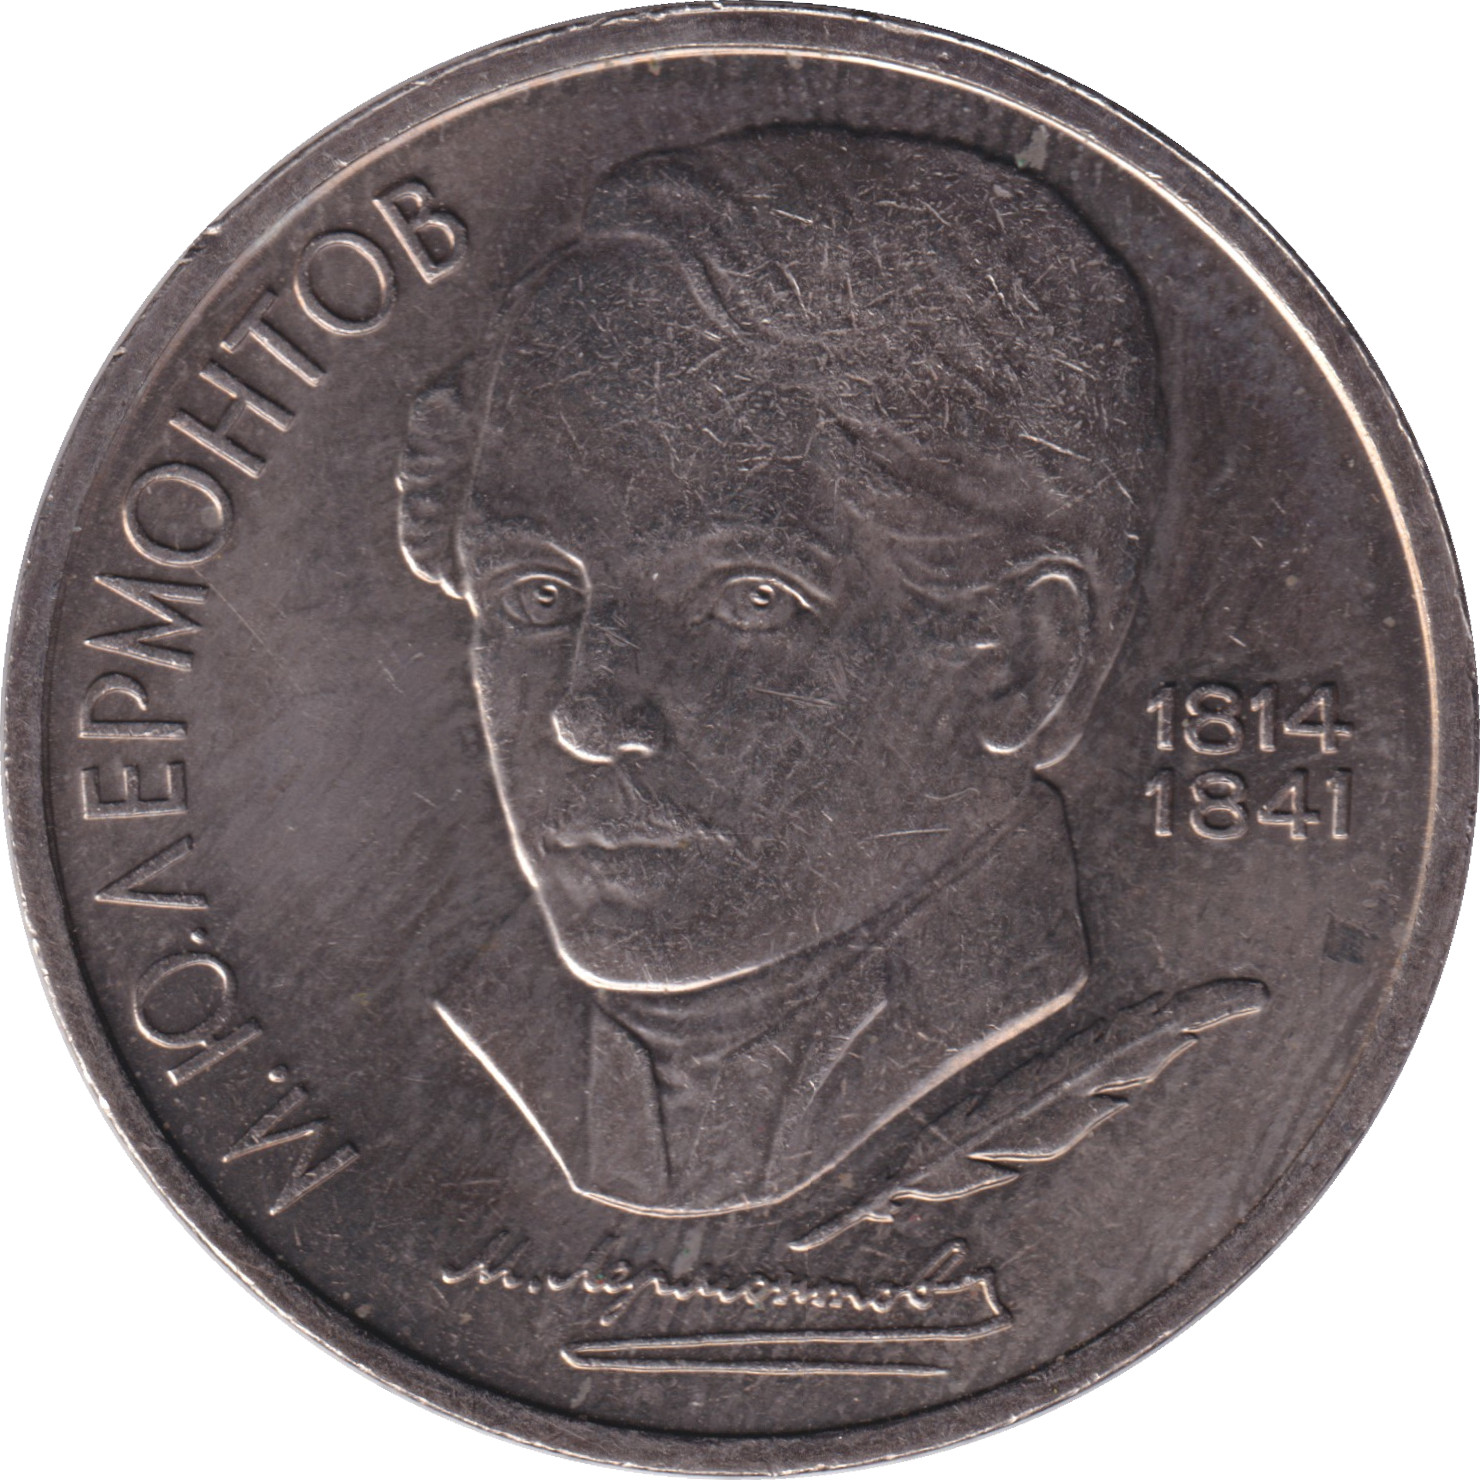 1 ruble - Lermontov